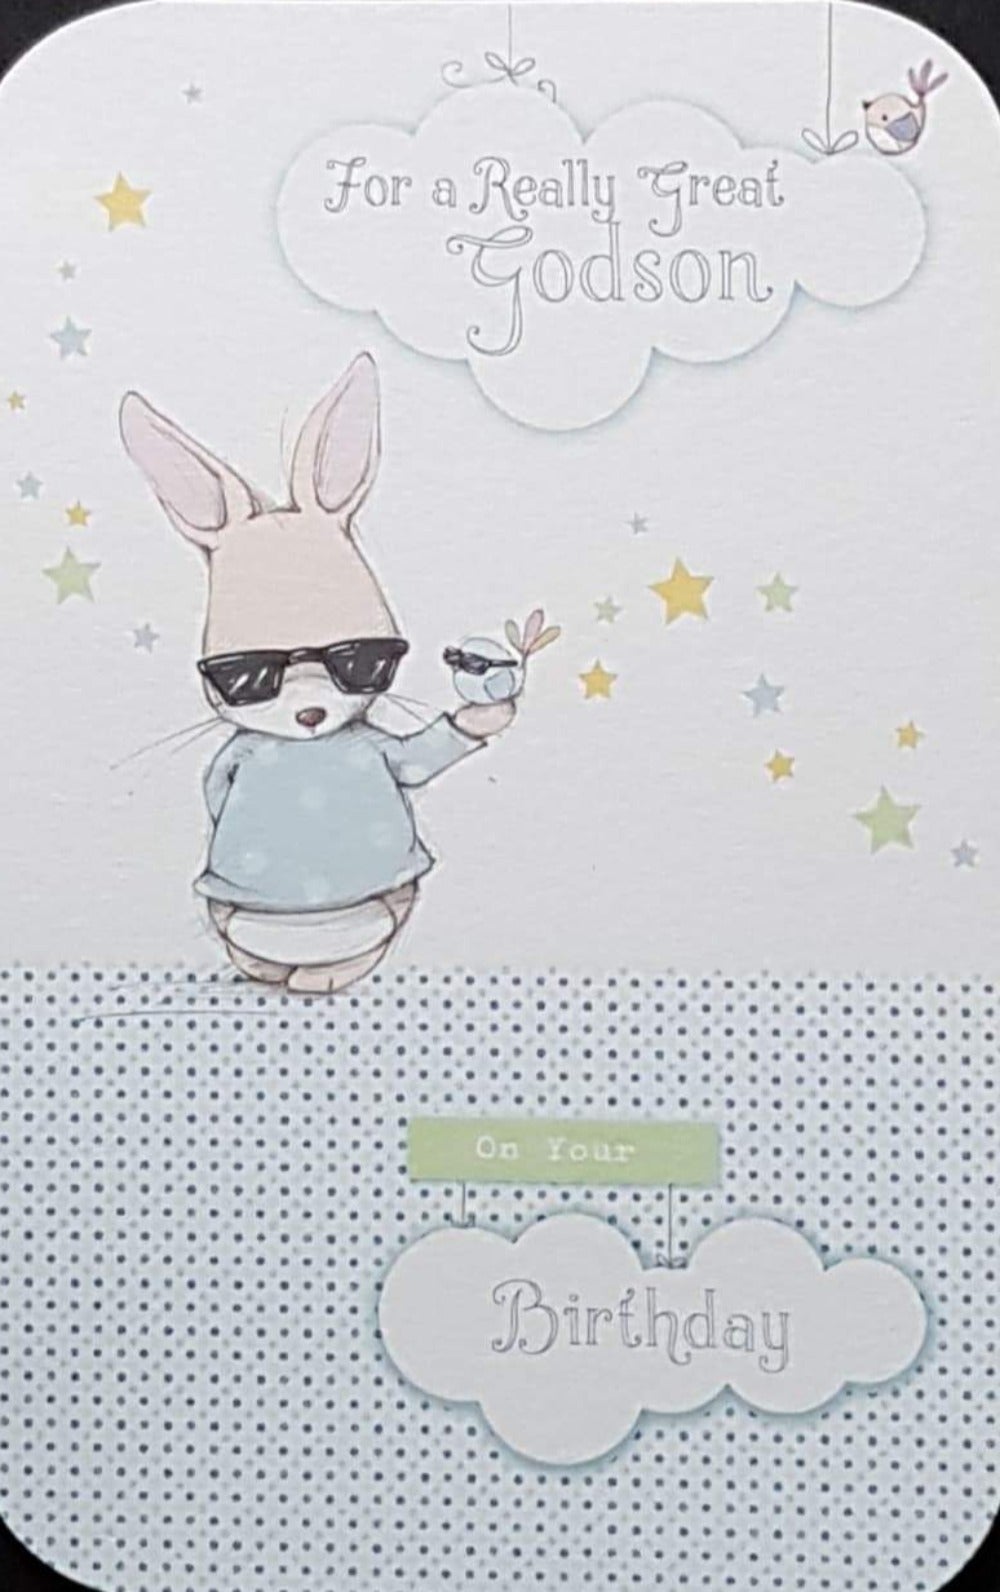 Birthday Card - Godson / A Rabbit And A Little Bird Wearing Shades